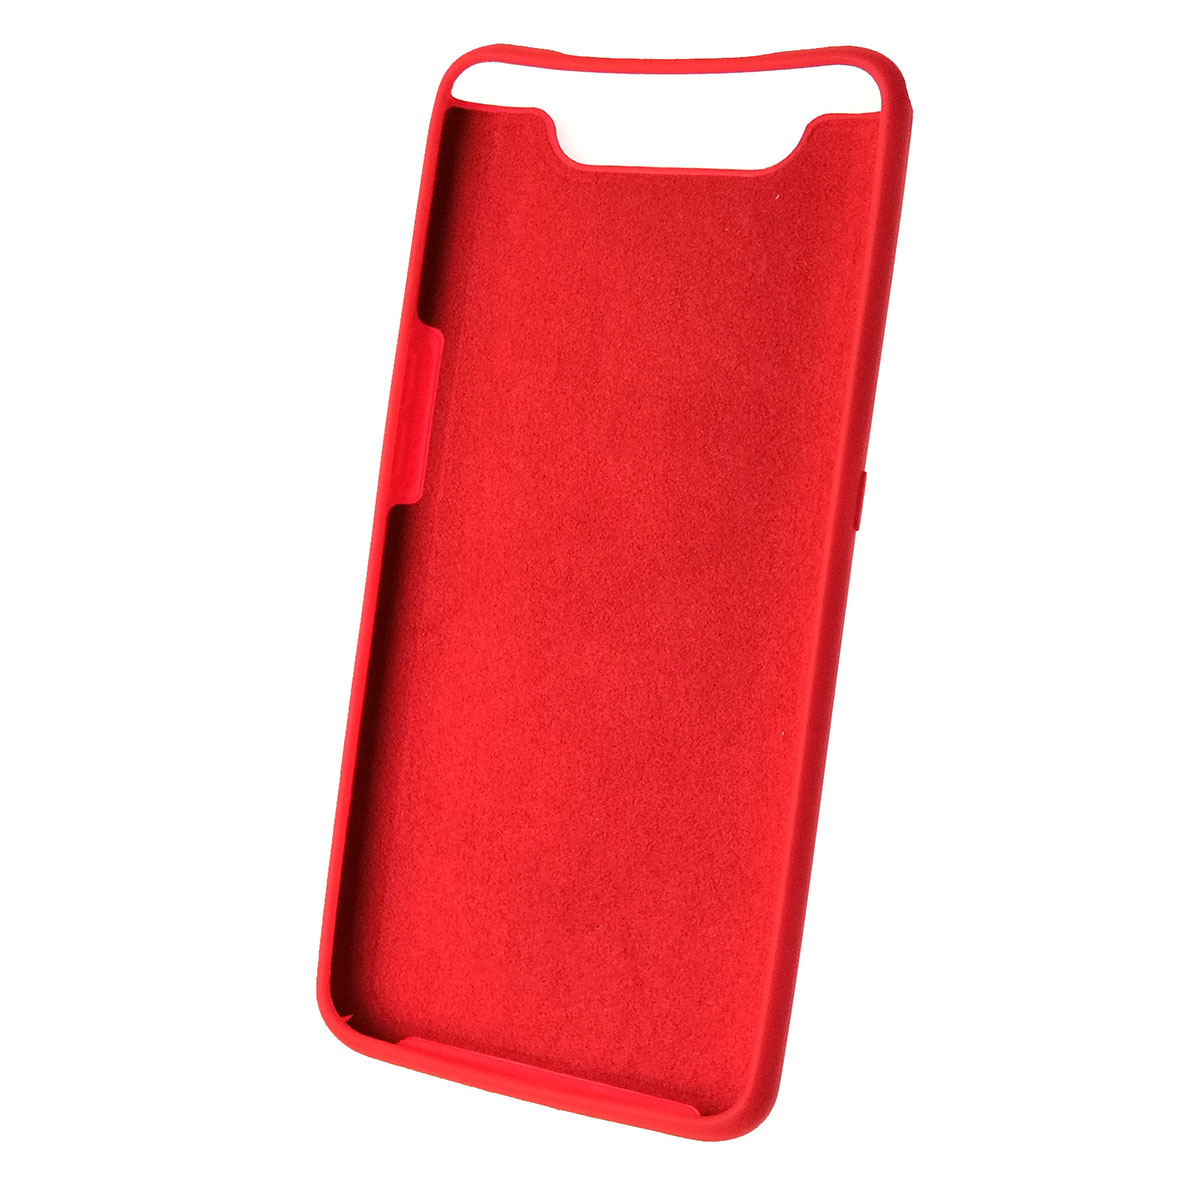 Чехол накладка Silicon Cover для Samsung A80 2019 (SM-A805), силикон, бархат, цвет красный.